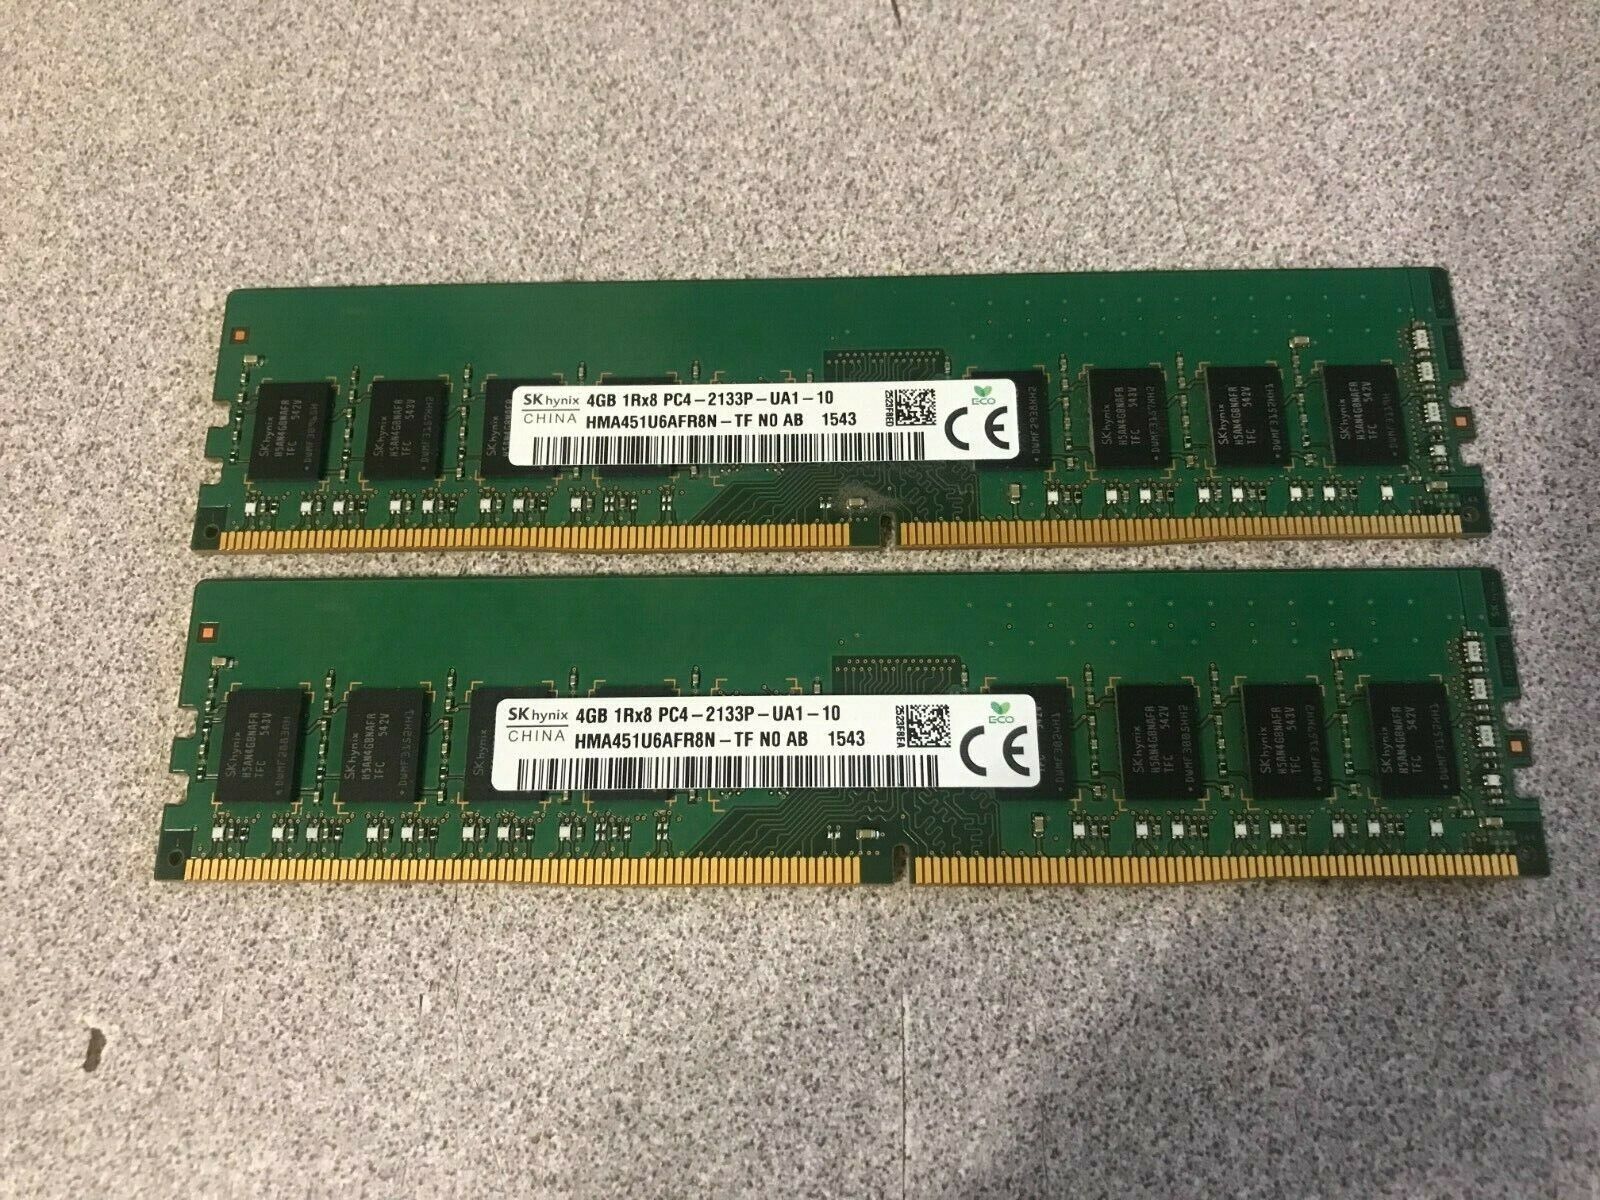 Lot of 8 GB (4 GB x 2) SK Hynix DDR4 PC4-2133P Desktop RAM Quick Ship SK hynix HMA451U6AFR8N